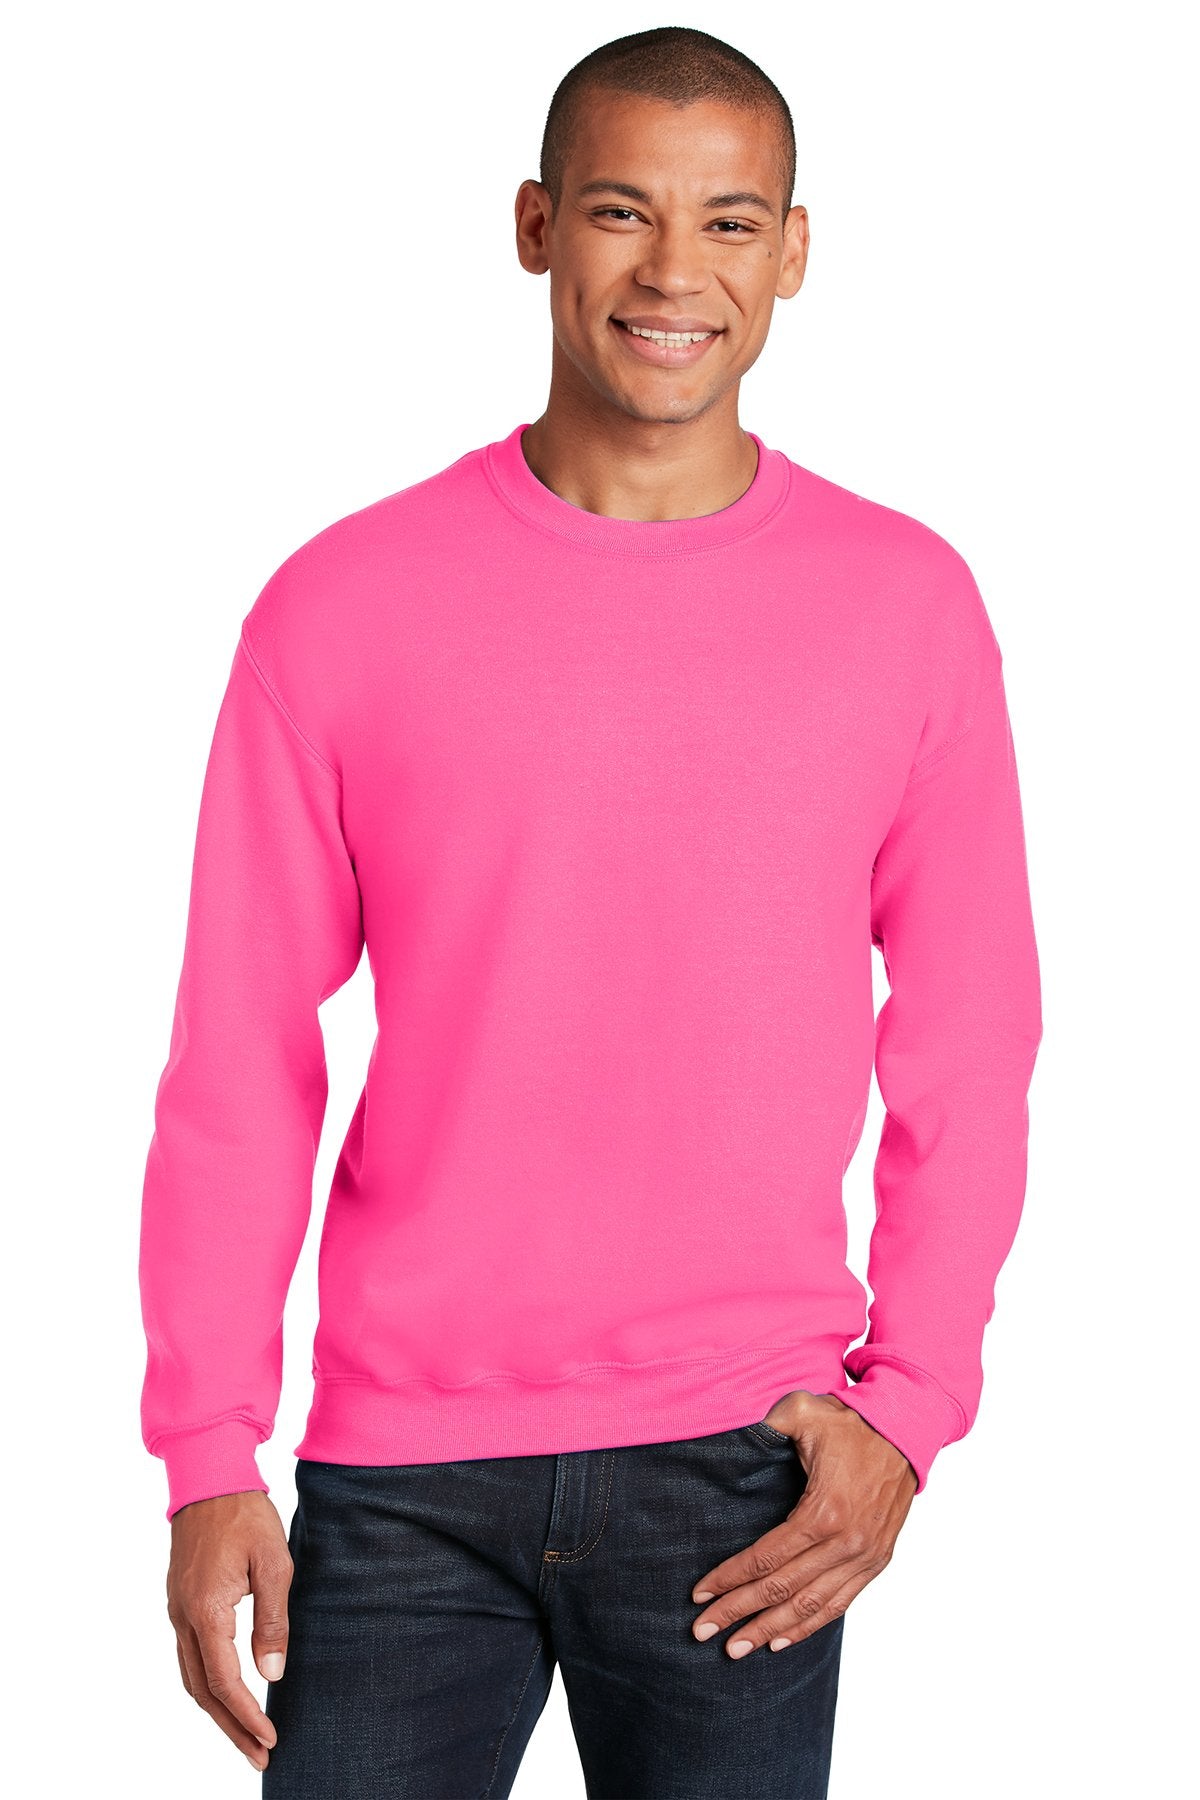 Gildan Safety Pink 18000 sweatshirts with logos